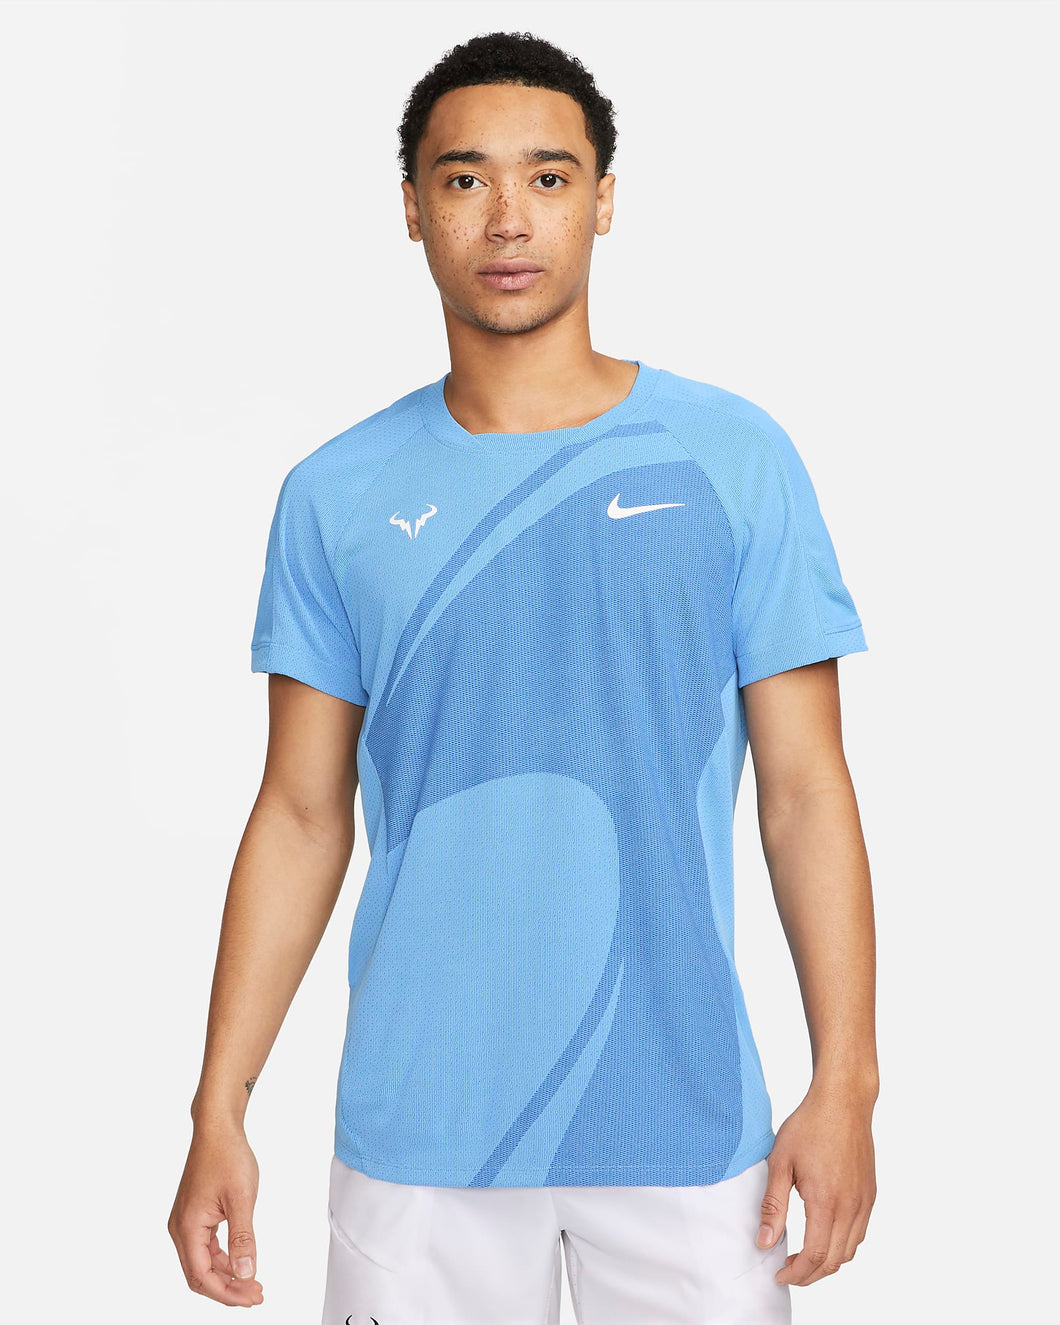 Men's Nike Dri-FIT ADV Short-Sleeve Tennis Top - 2023 NEW ARRIVAL